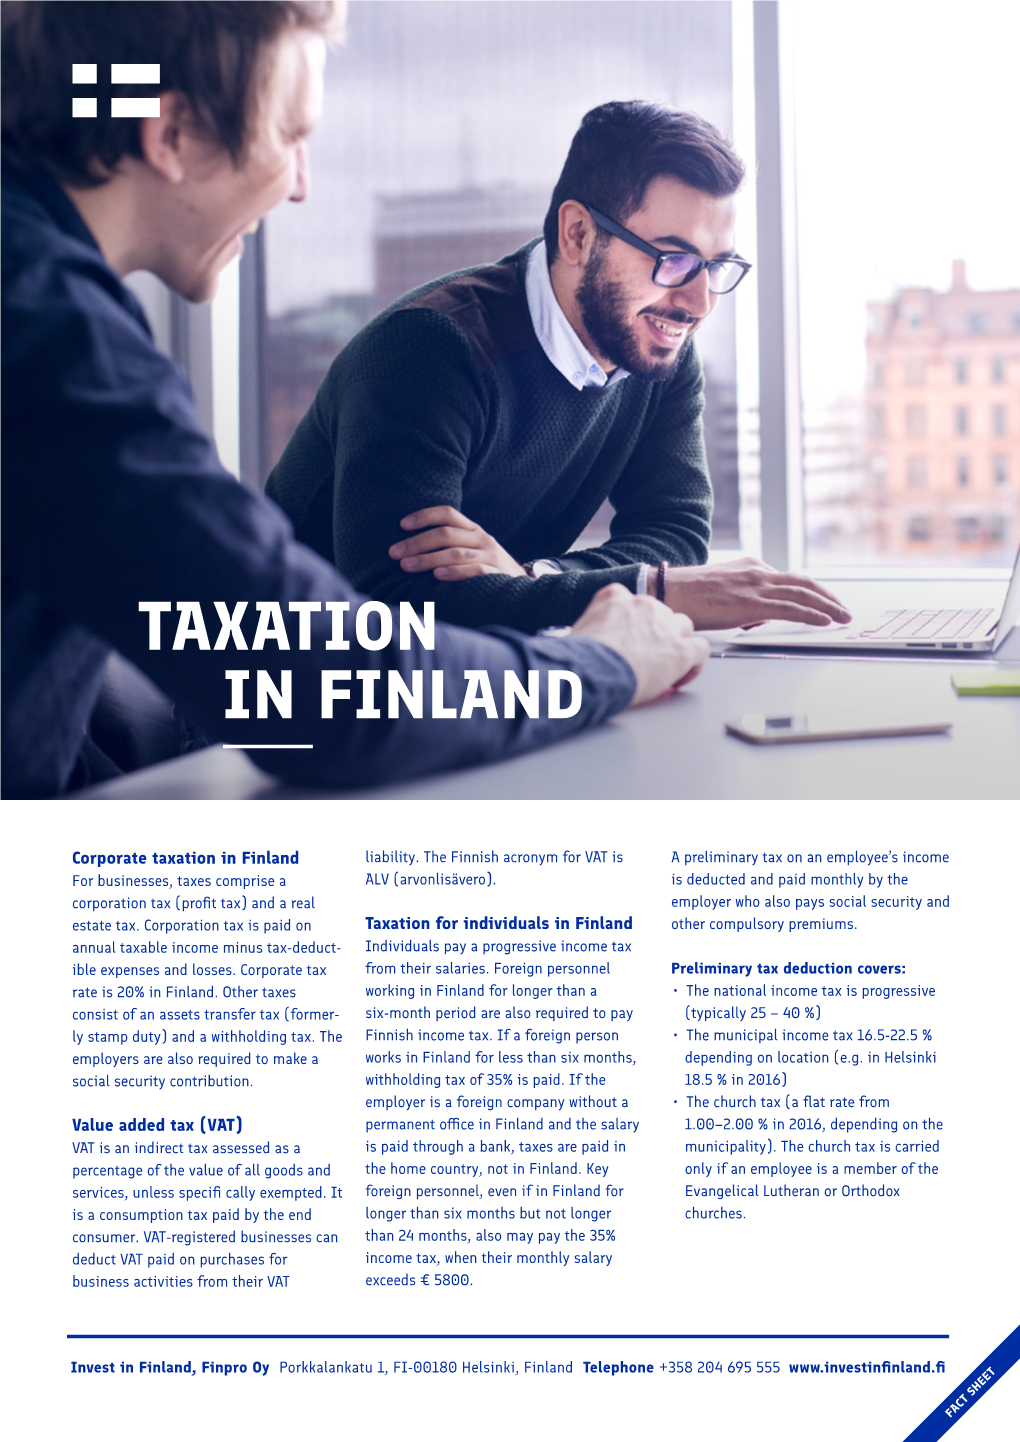 Taxation in Finland